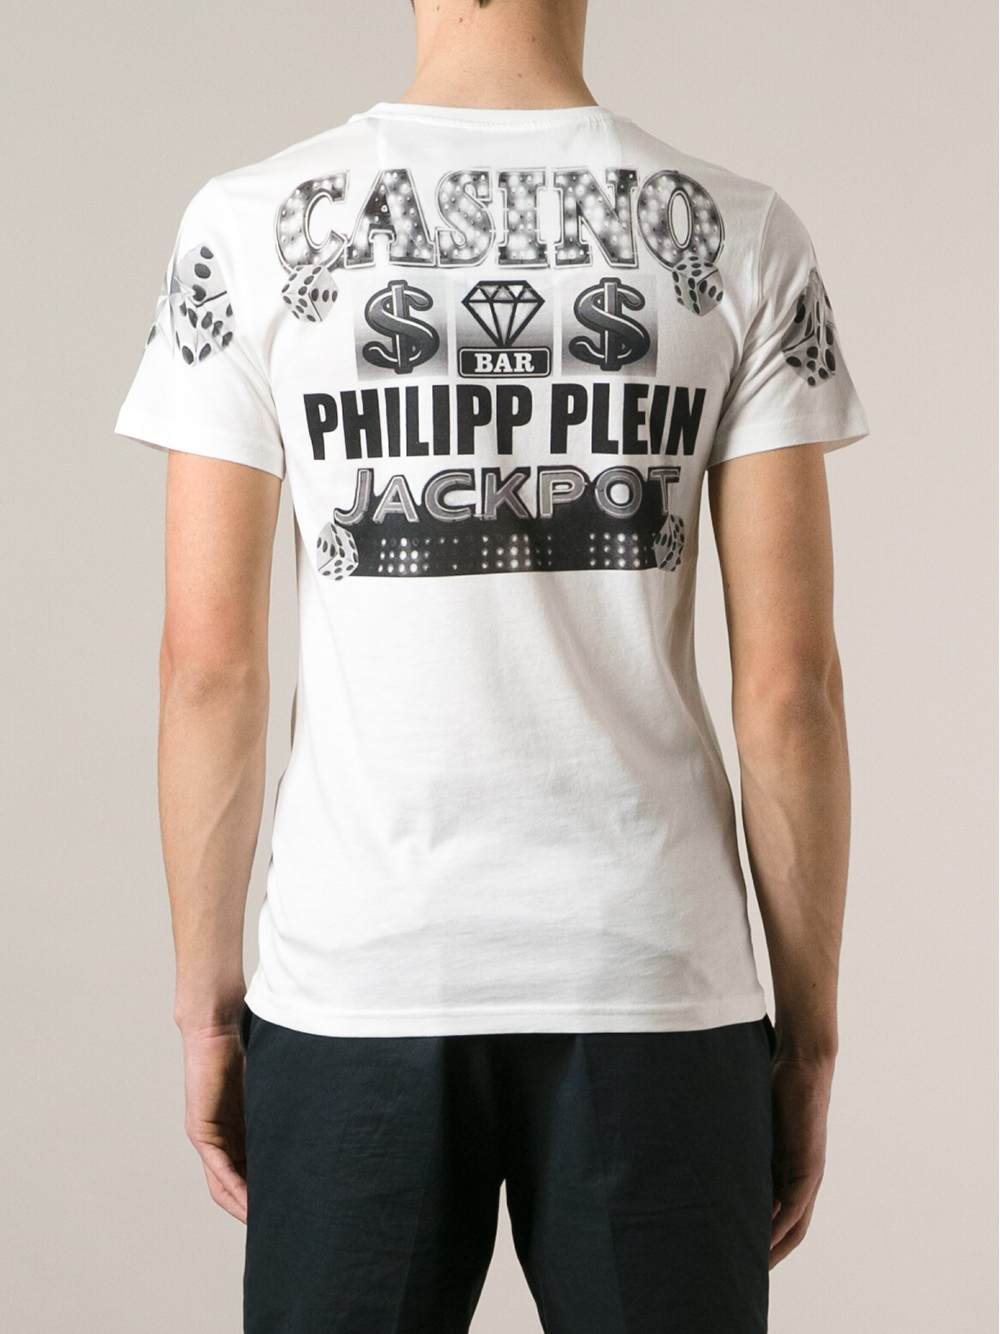 Philipp Plein Casino Jackpot Print 